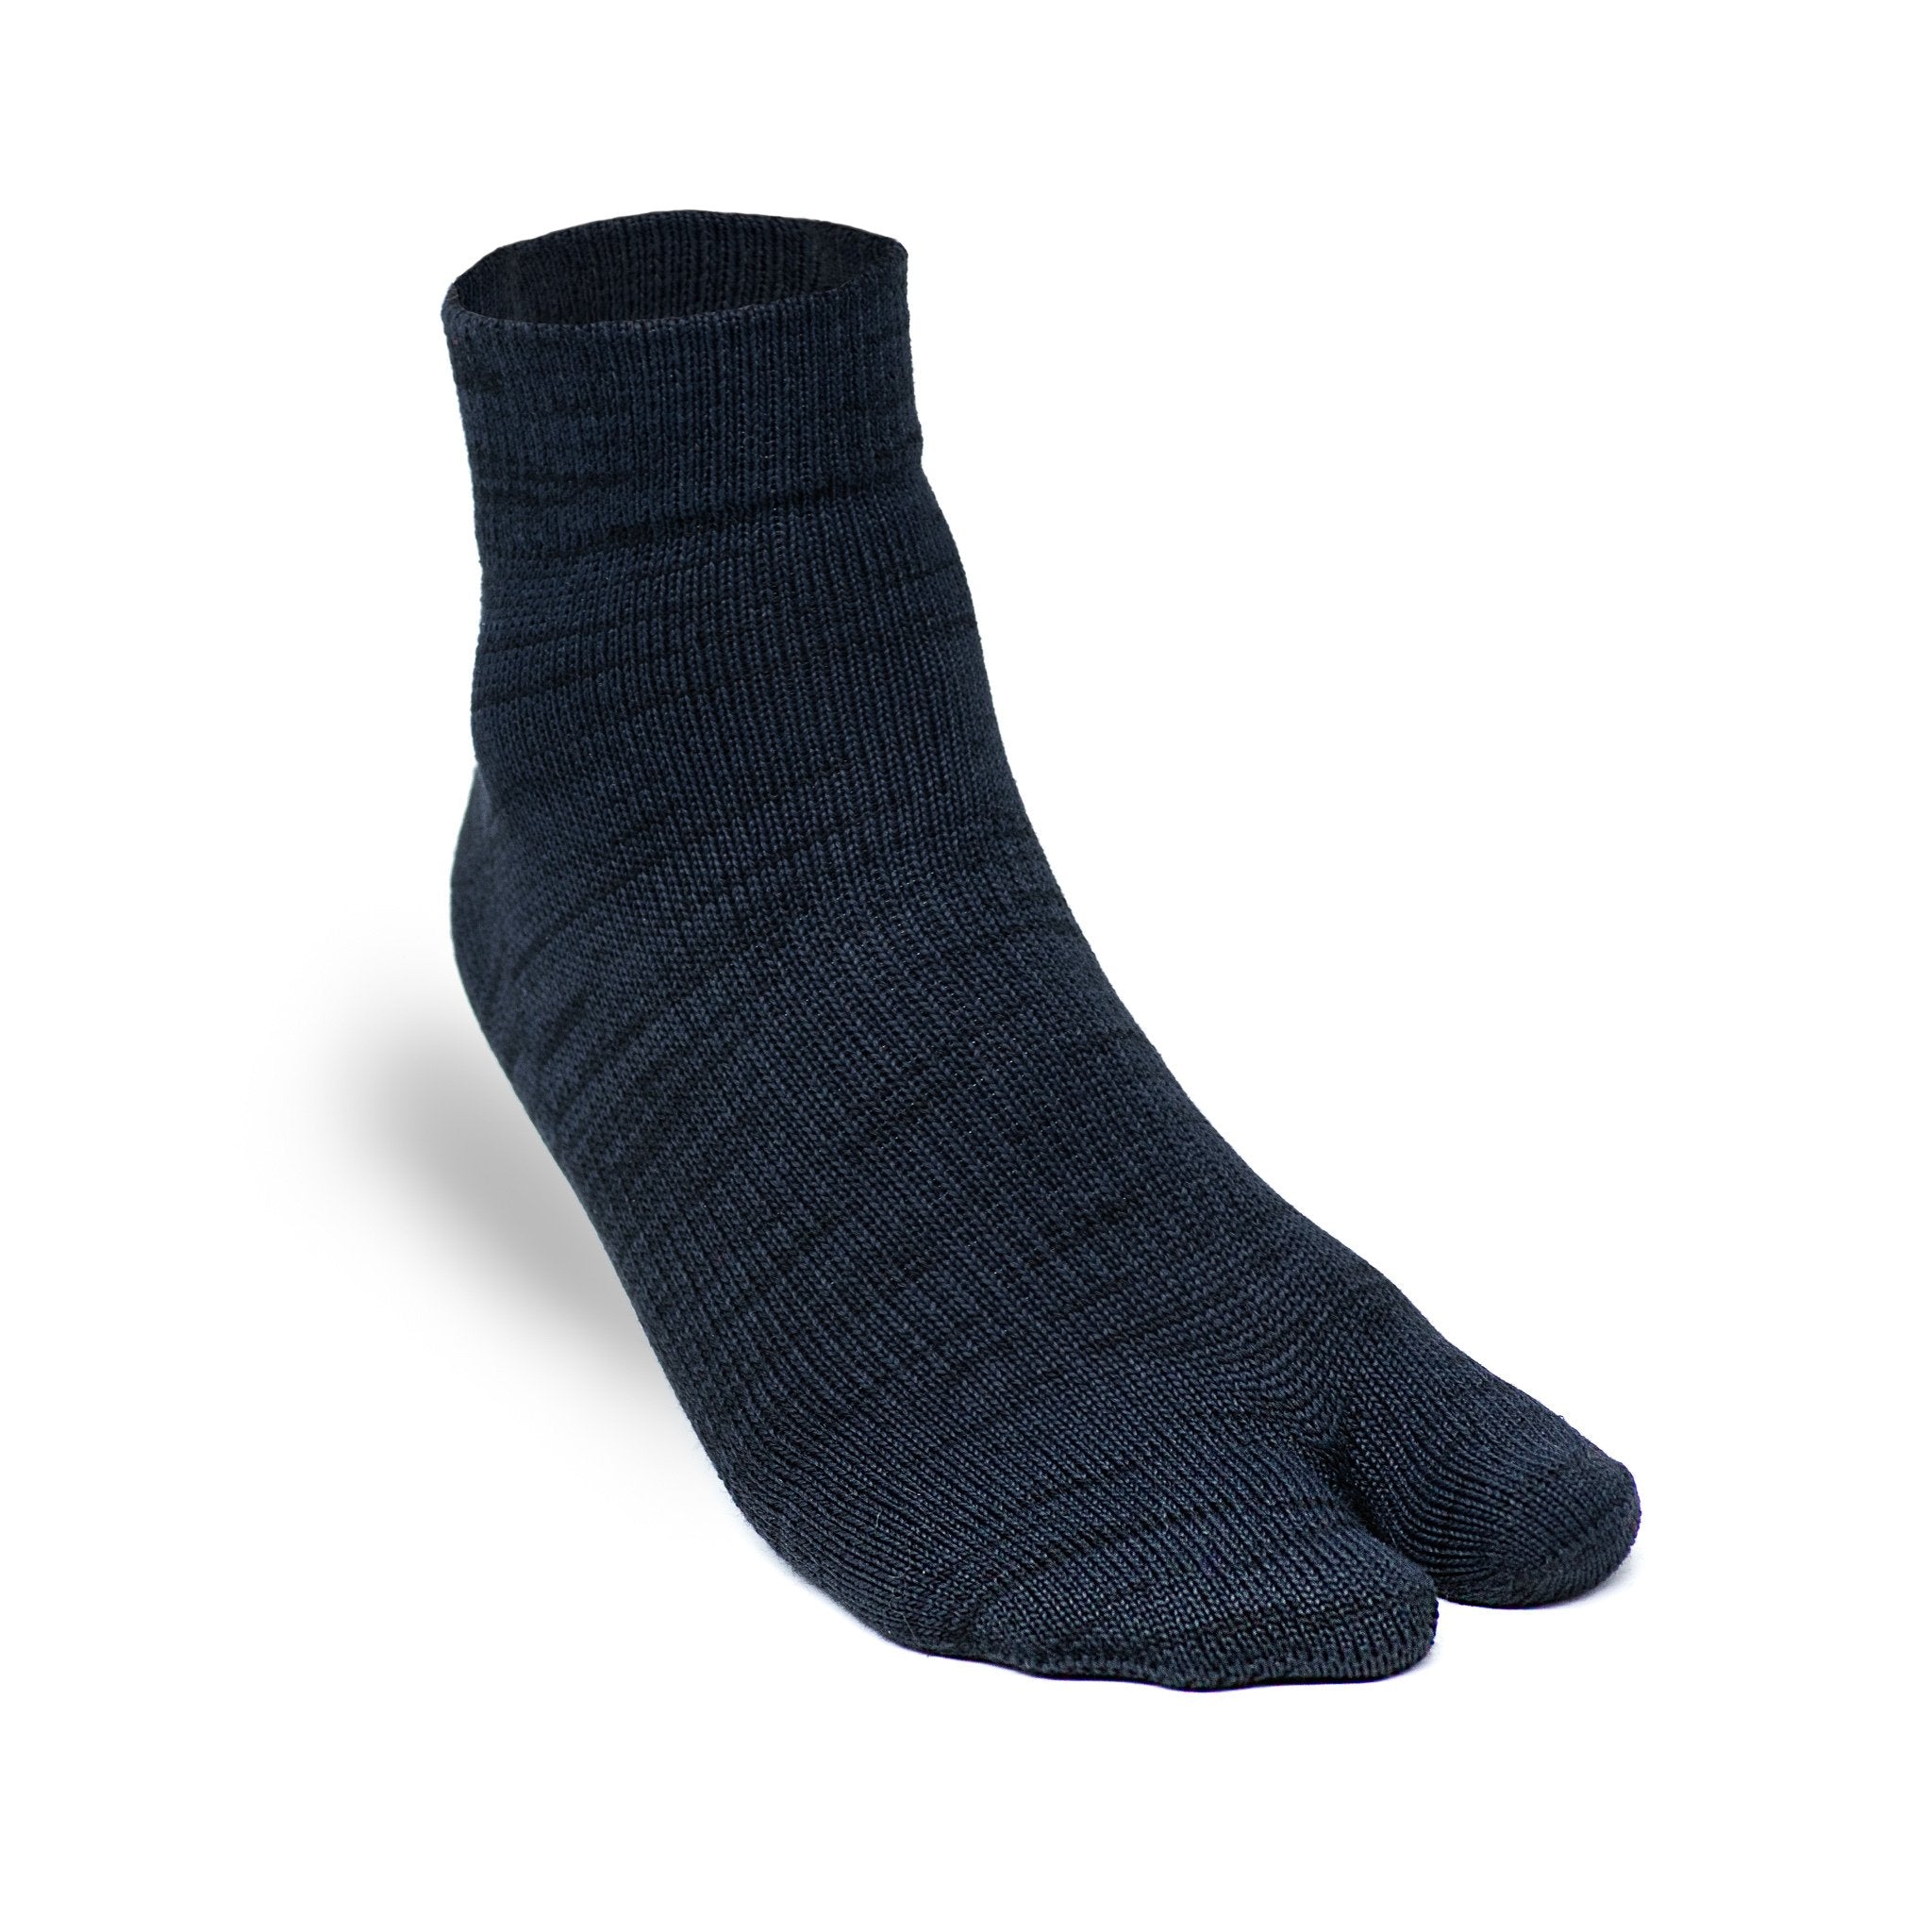 LUNA YUBI Tabi Socks - Merino Wool & Cordura - Ankle Length